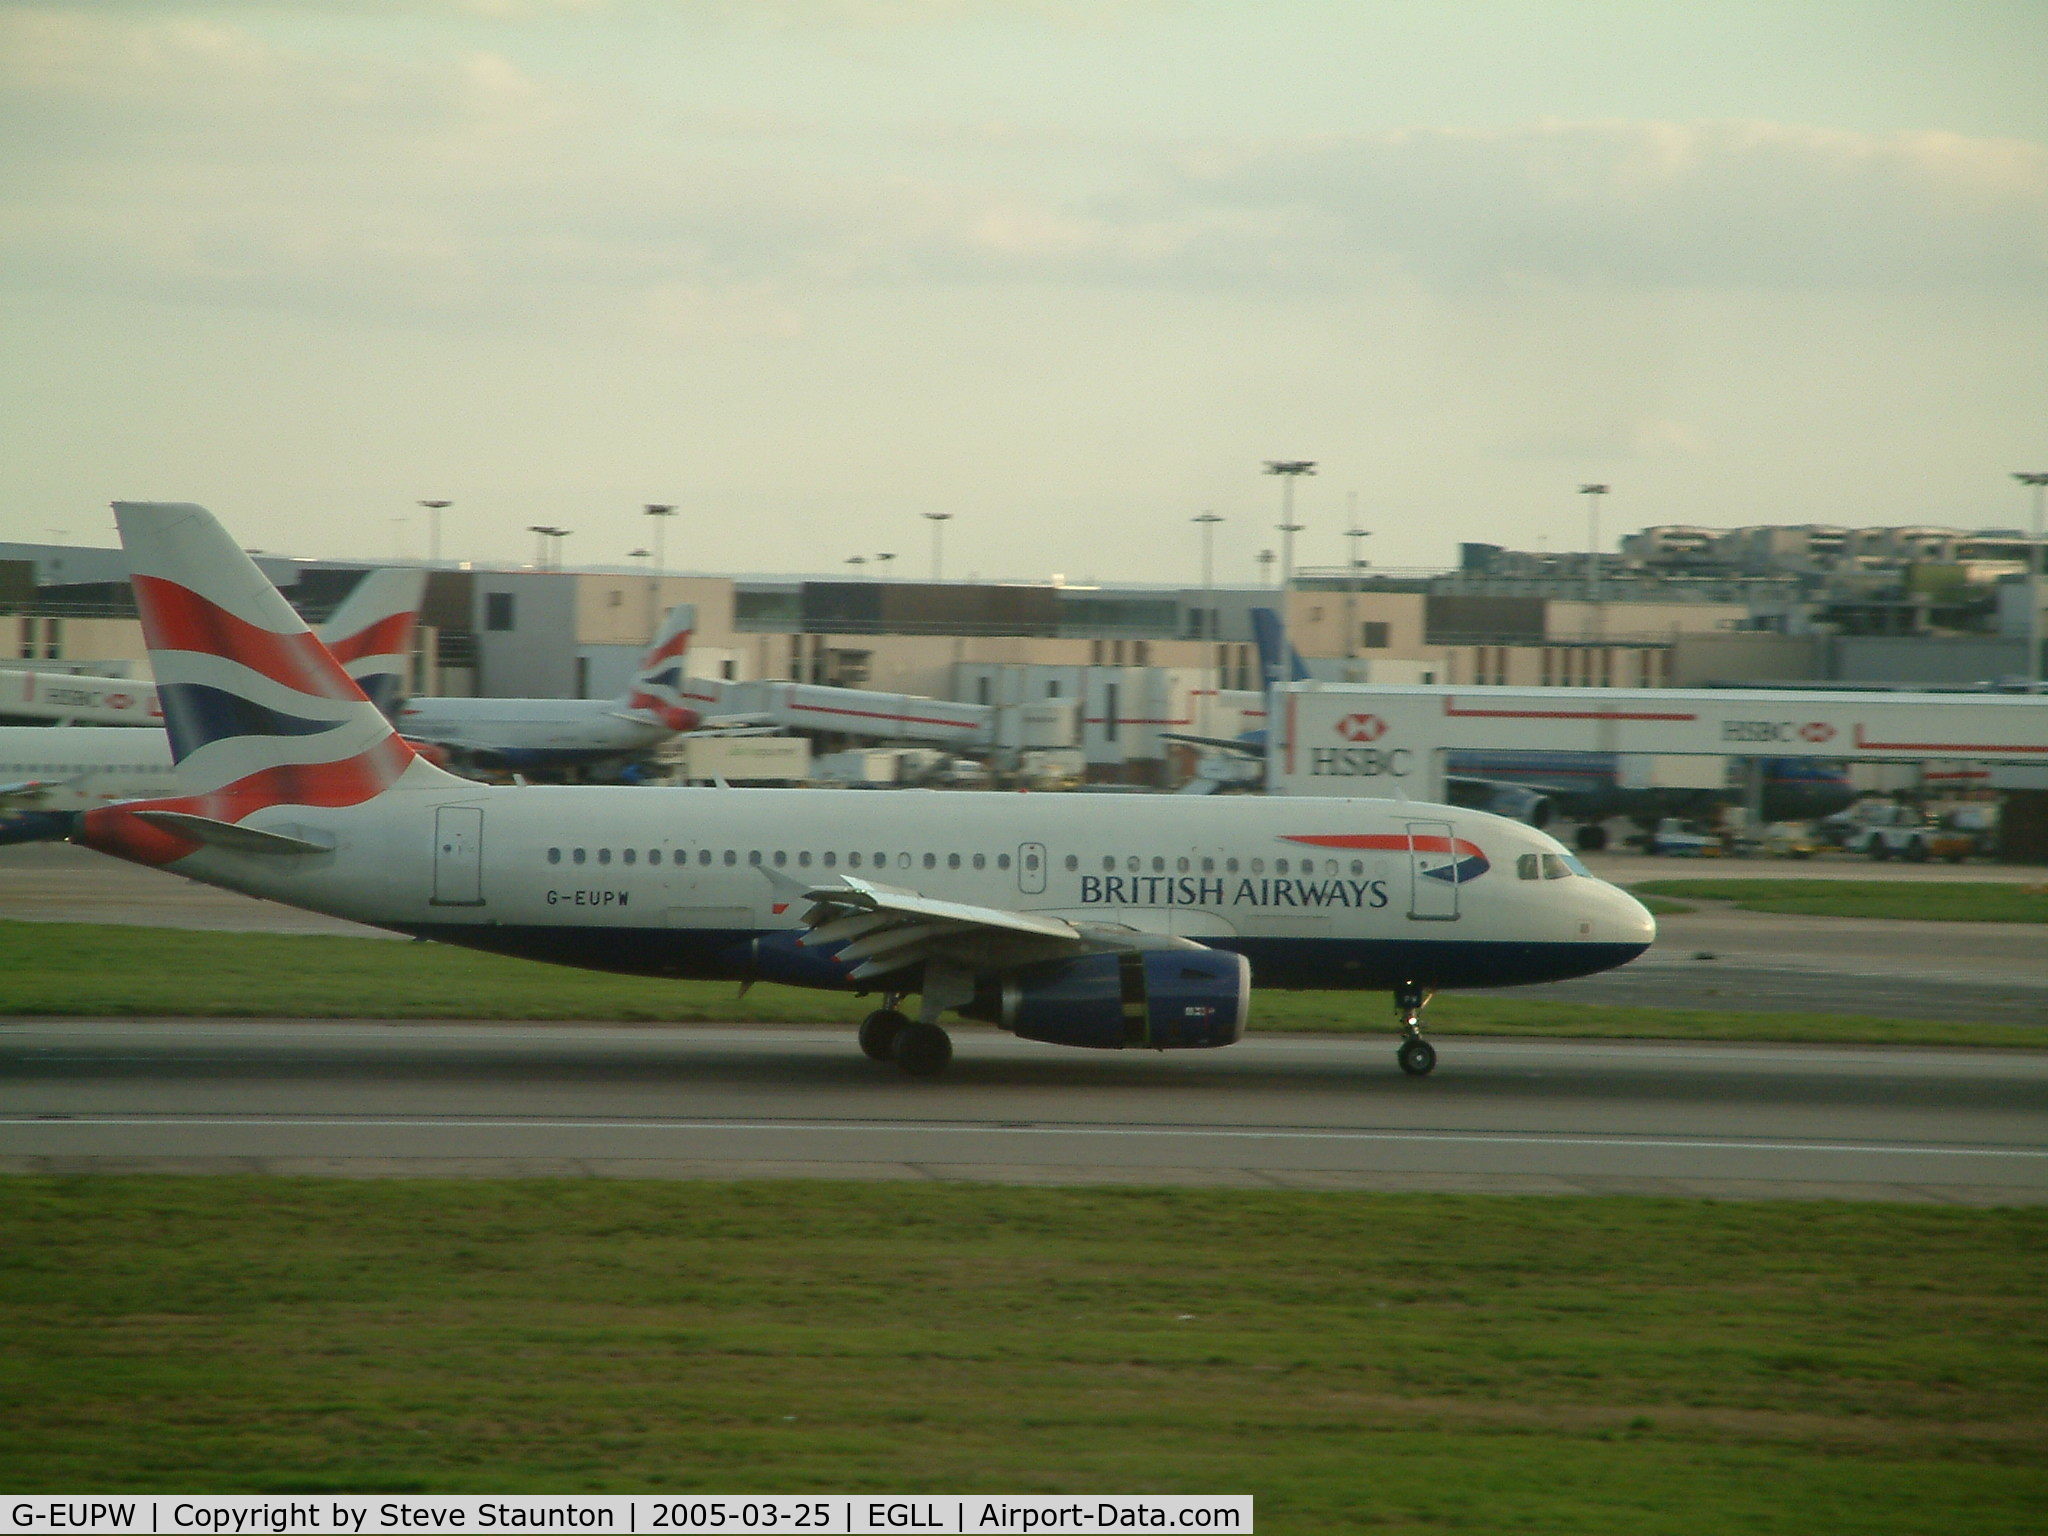 G-EUPW, 2001 Airbus A319-131 C/N 1440, Taken at Heathrow Airport March 2005